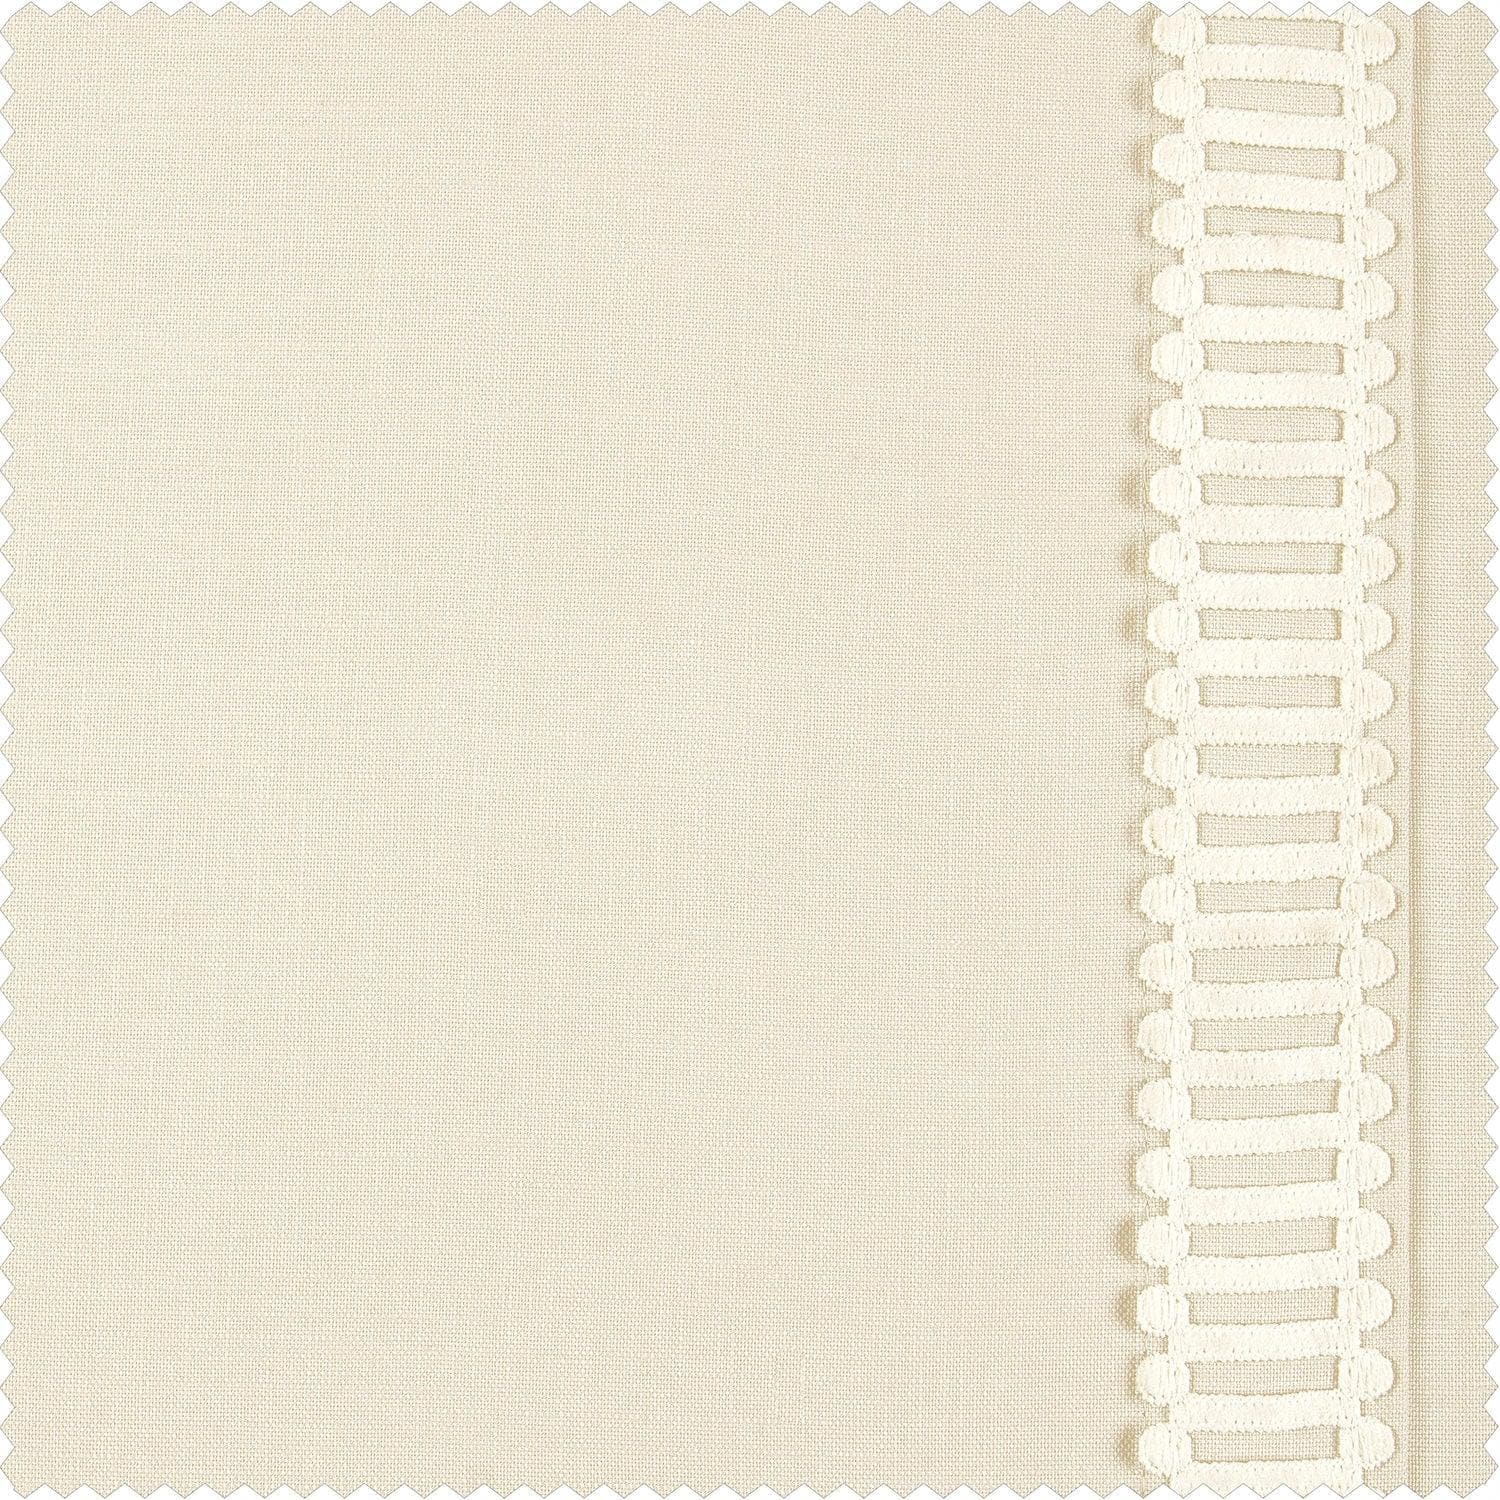 Maidstone Modern Hampton Textured Cotton Curtain